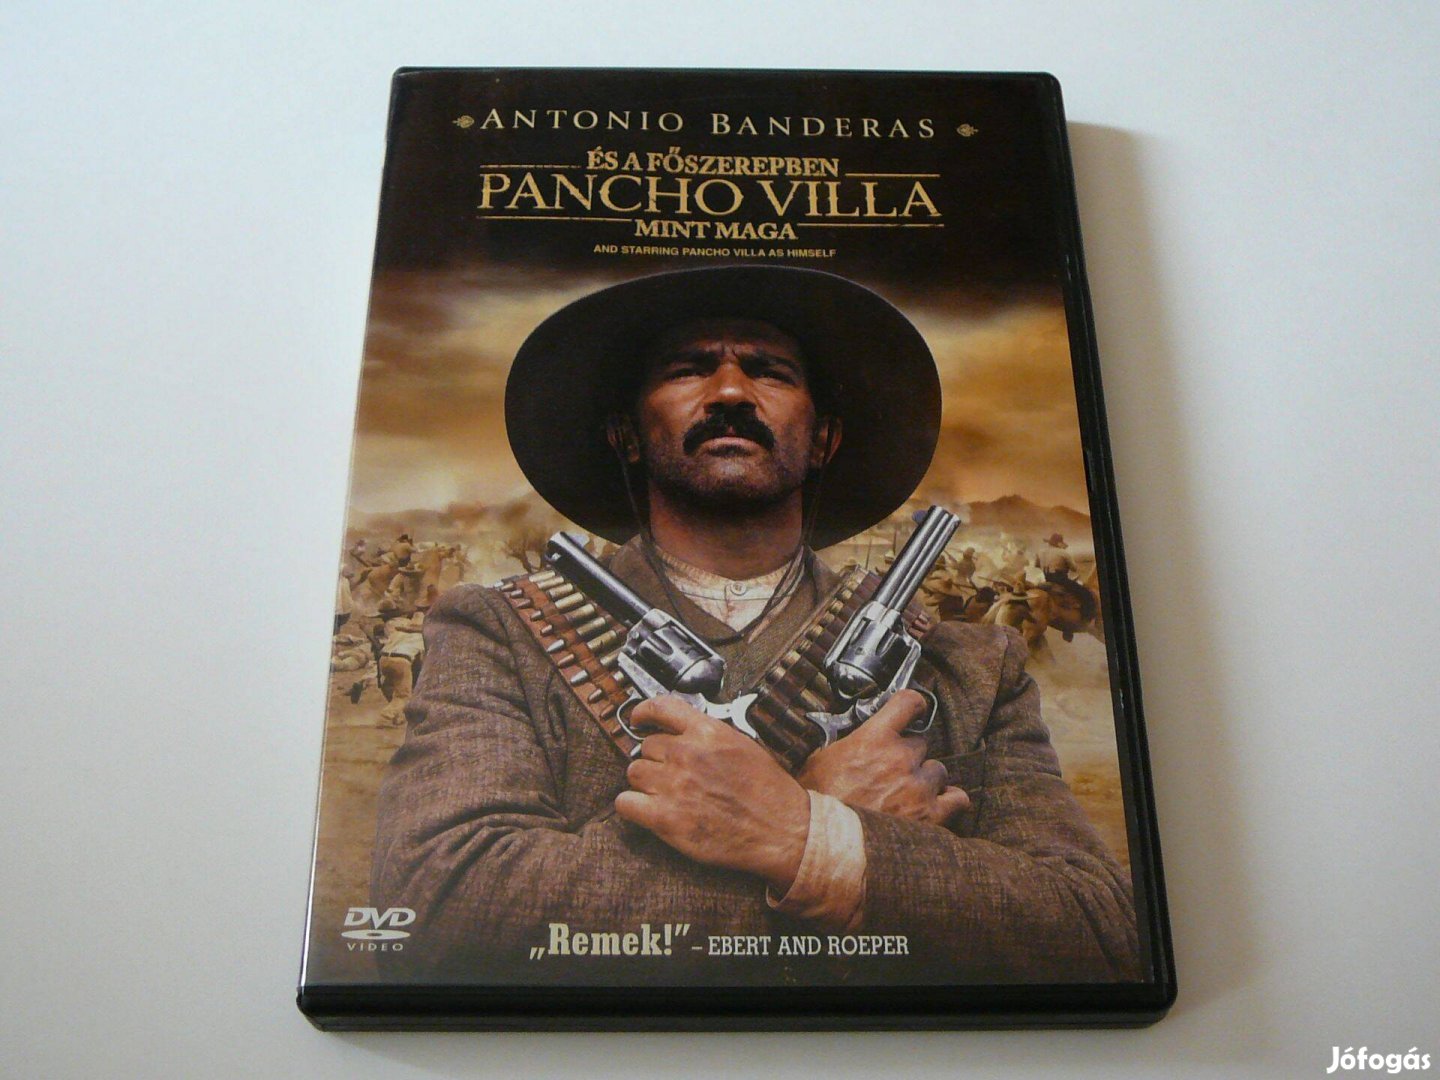 És a főszerepben Pancho Villa, mint maga - Antonio Banderas DVD Film